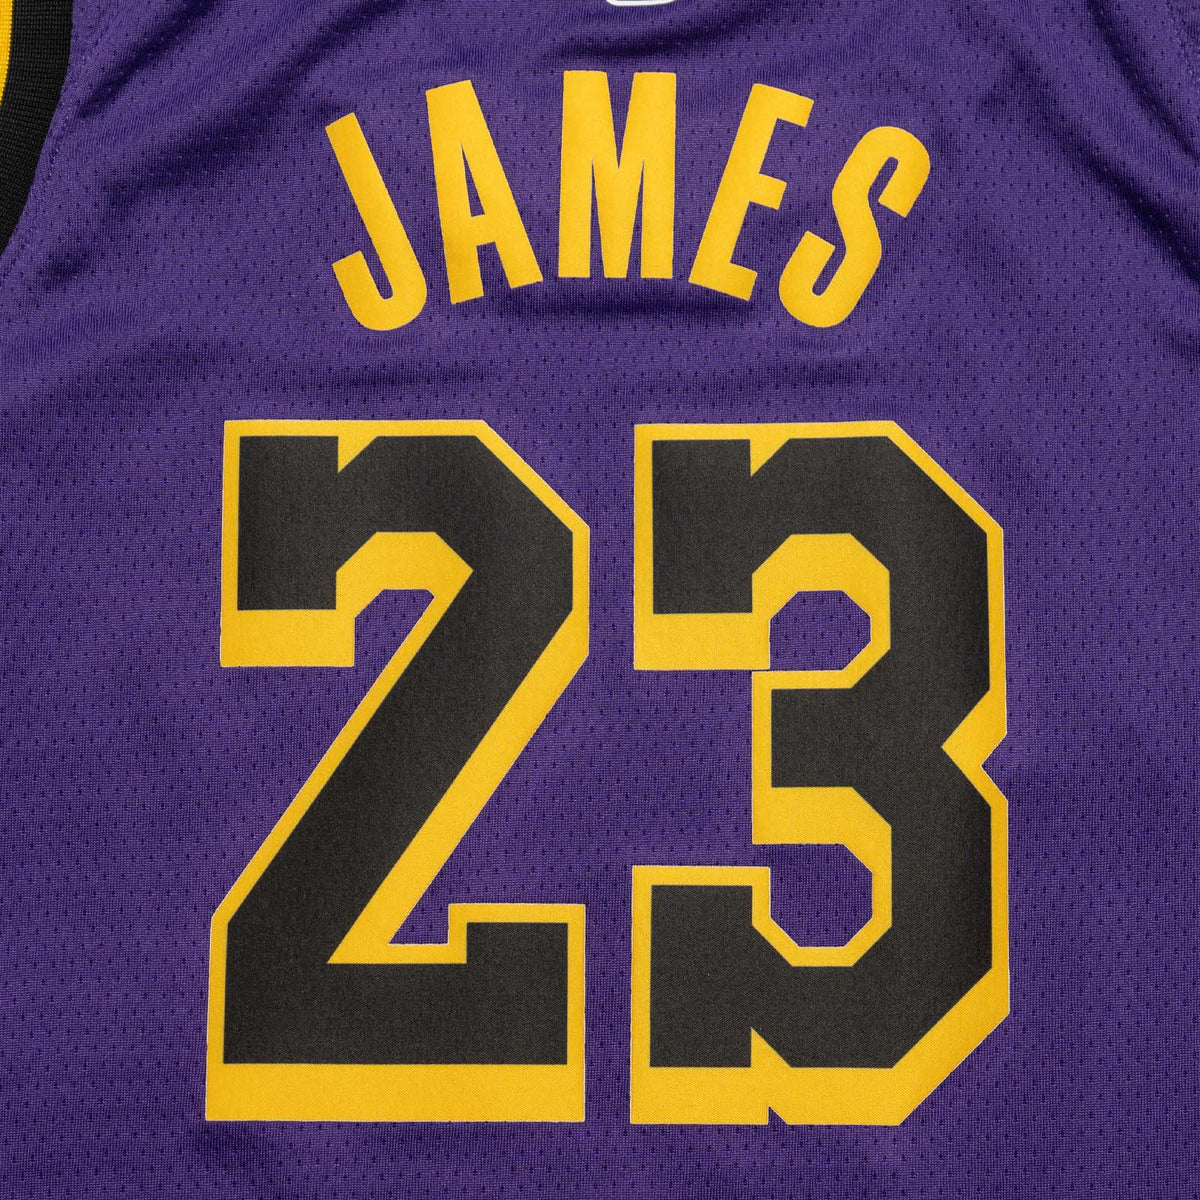 LeBron James LA Lakers Statement Swingman Jersey